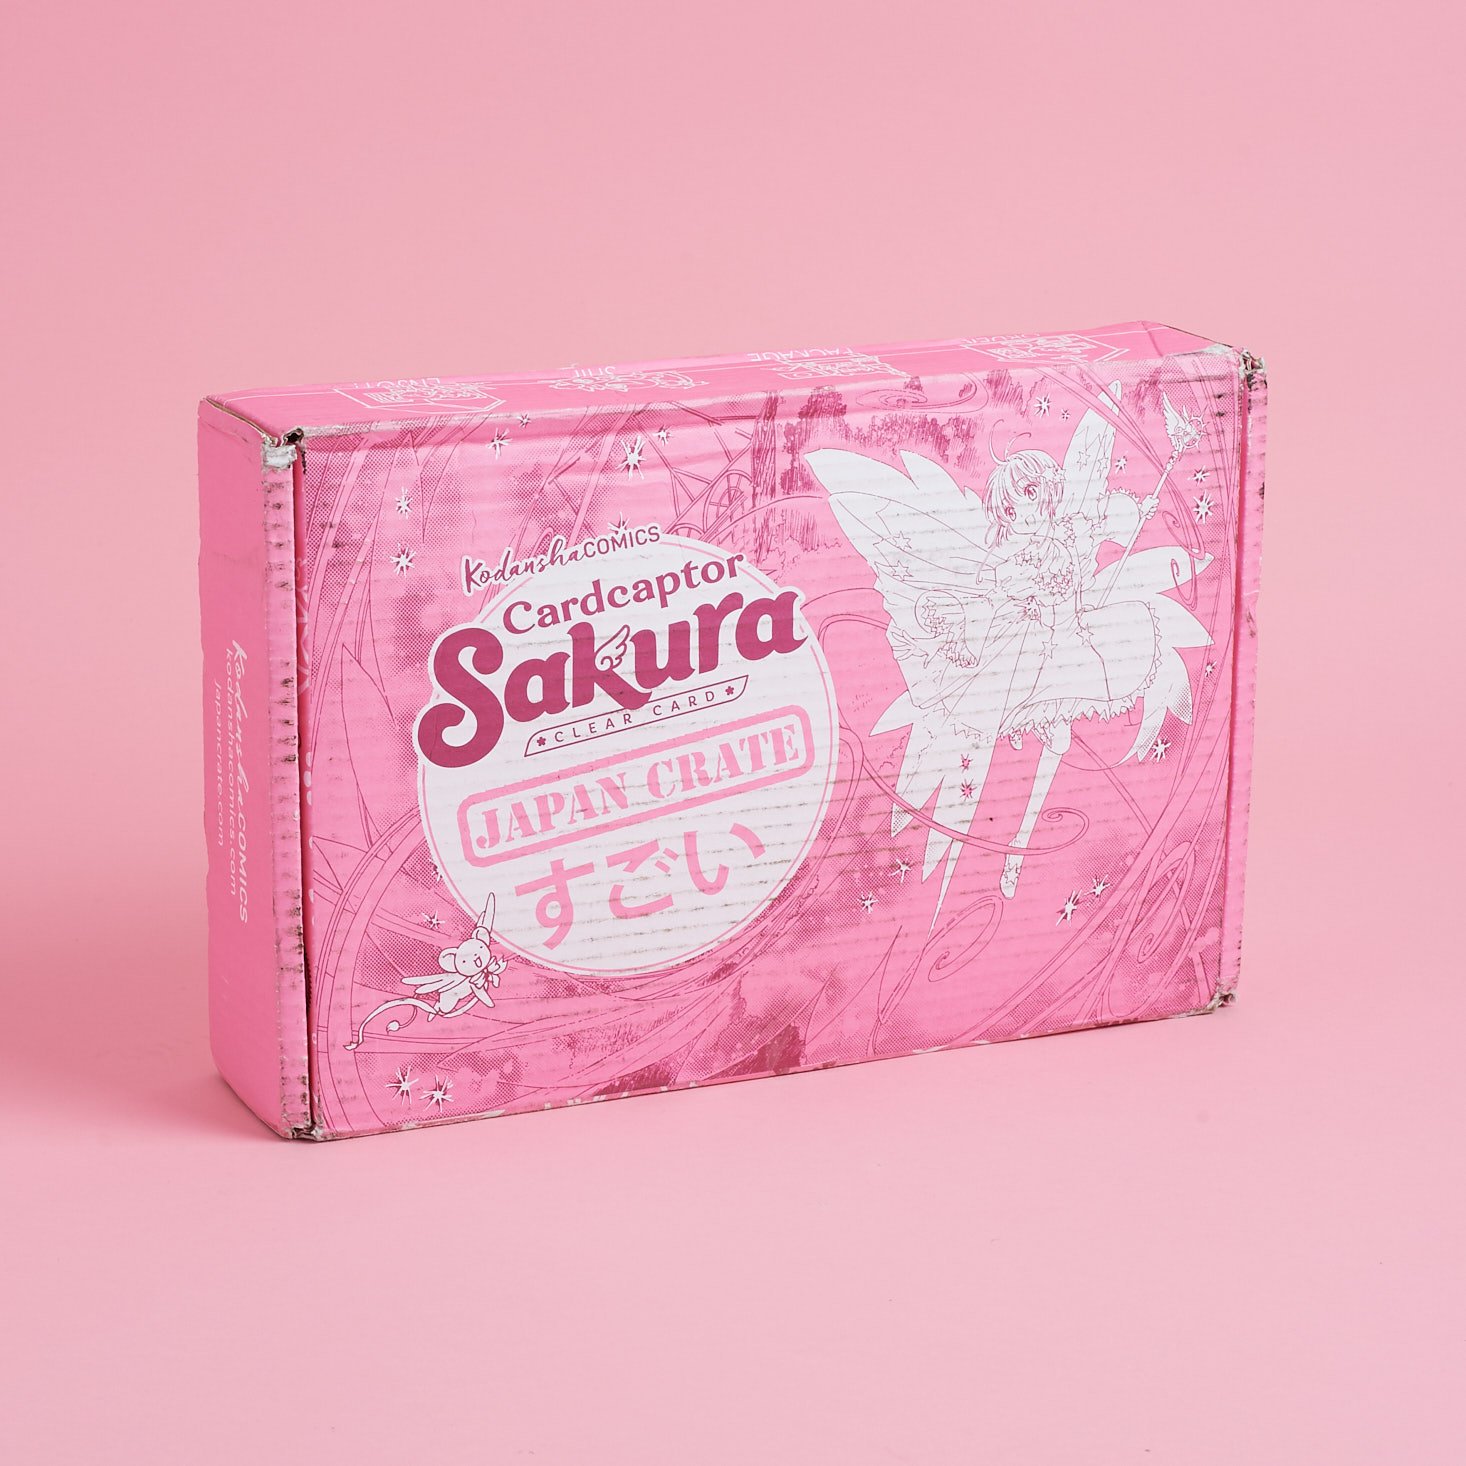 Japan Crate Premium Cardcaptor Sakura Box Review + Coupon – August 2018